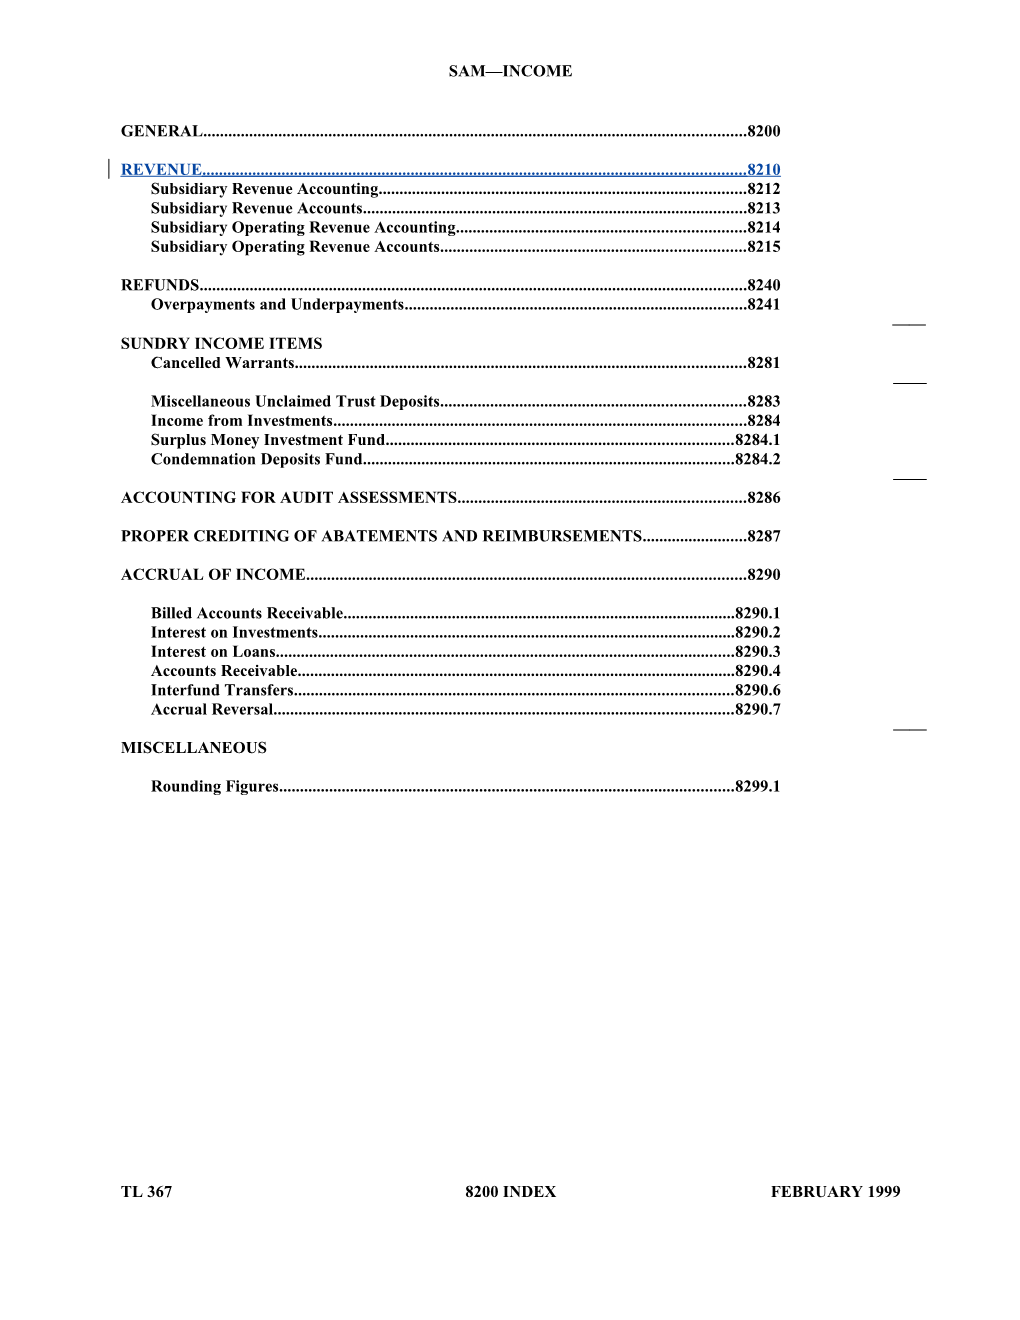 Subsidiary Operating Revenue Accounting 8214